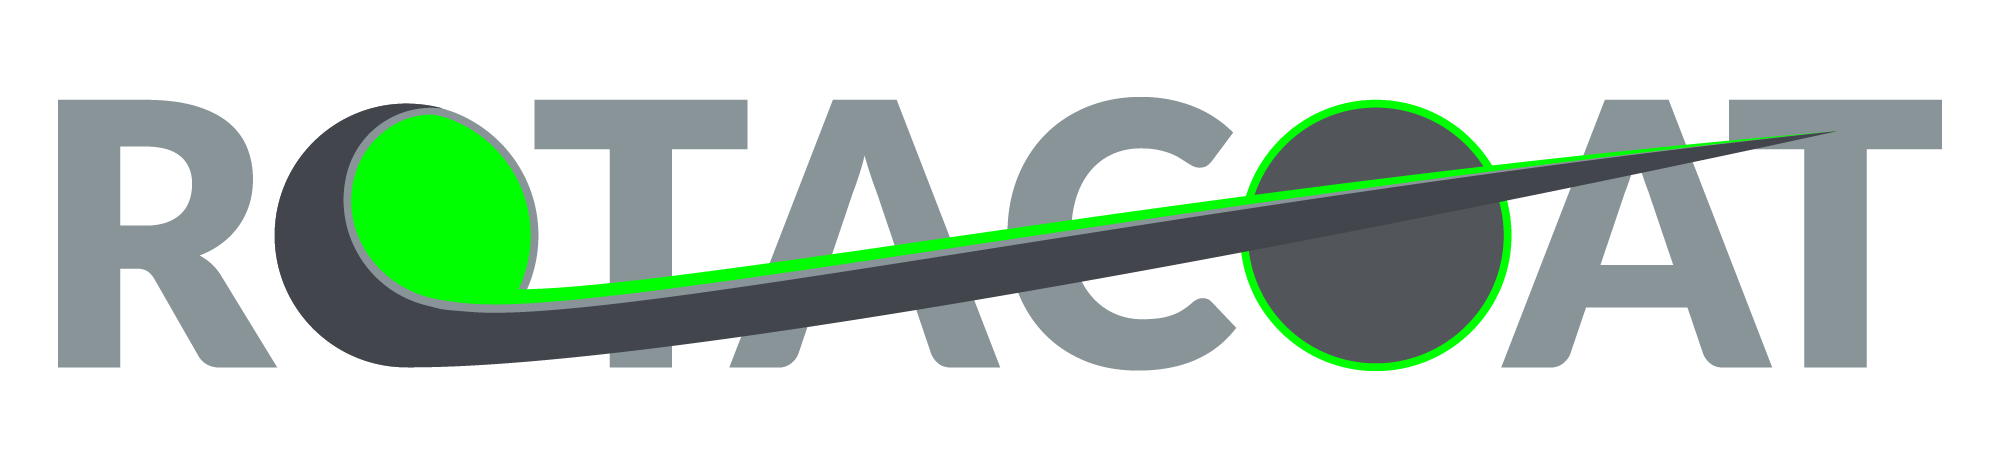 ROTACOAT-logo-verde